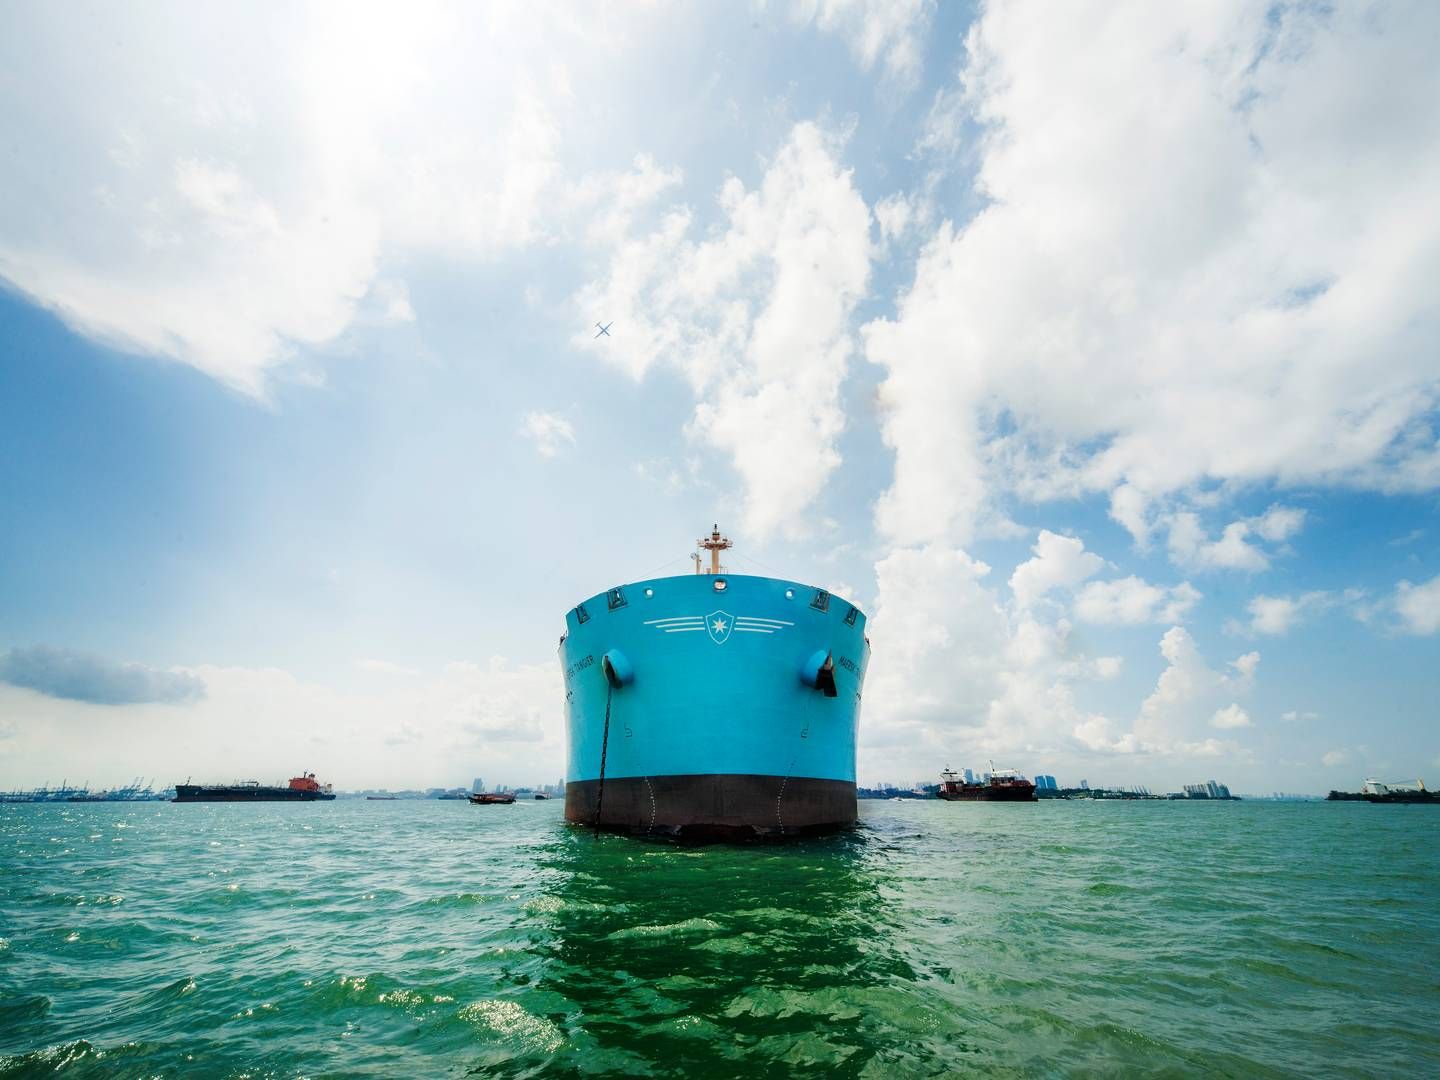 Arkivfoto. Billedet viser et skib fra Maersk Tankers, men ikke Maersk Magellan, som historien omhandler. | Foto: Pr / Maersk Tankers